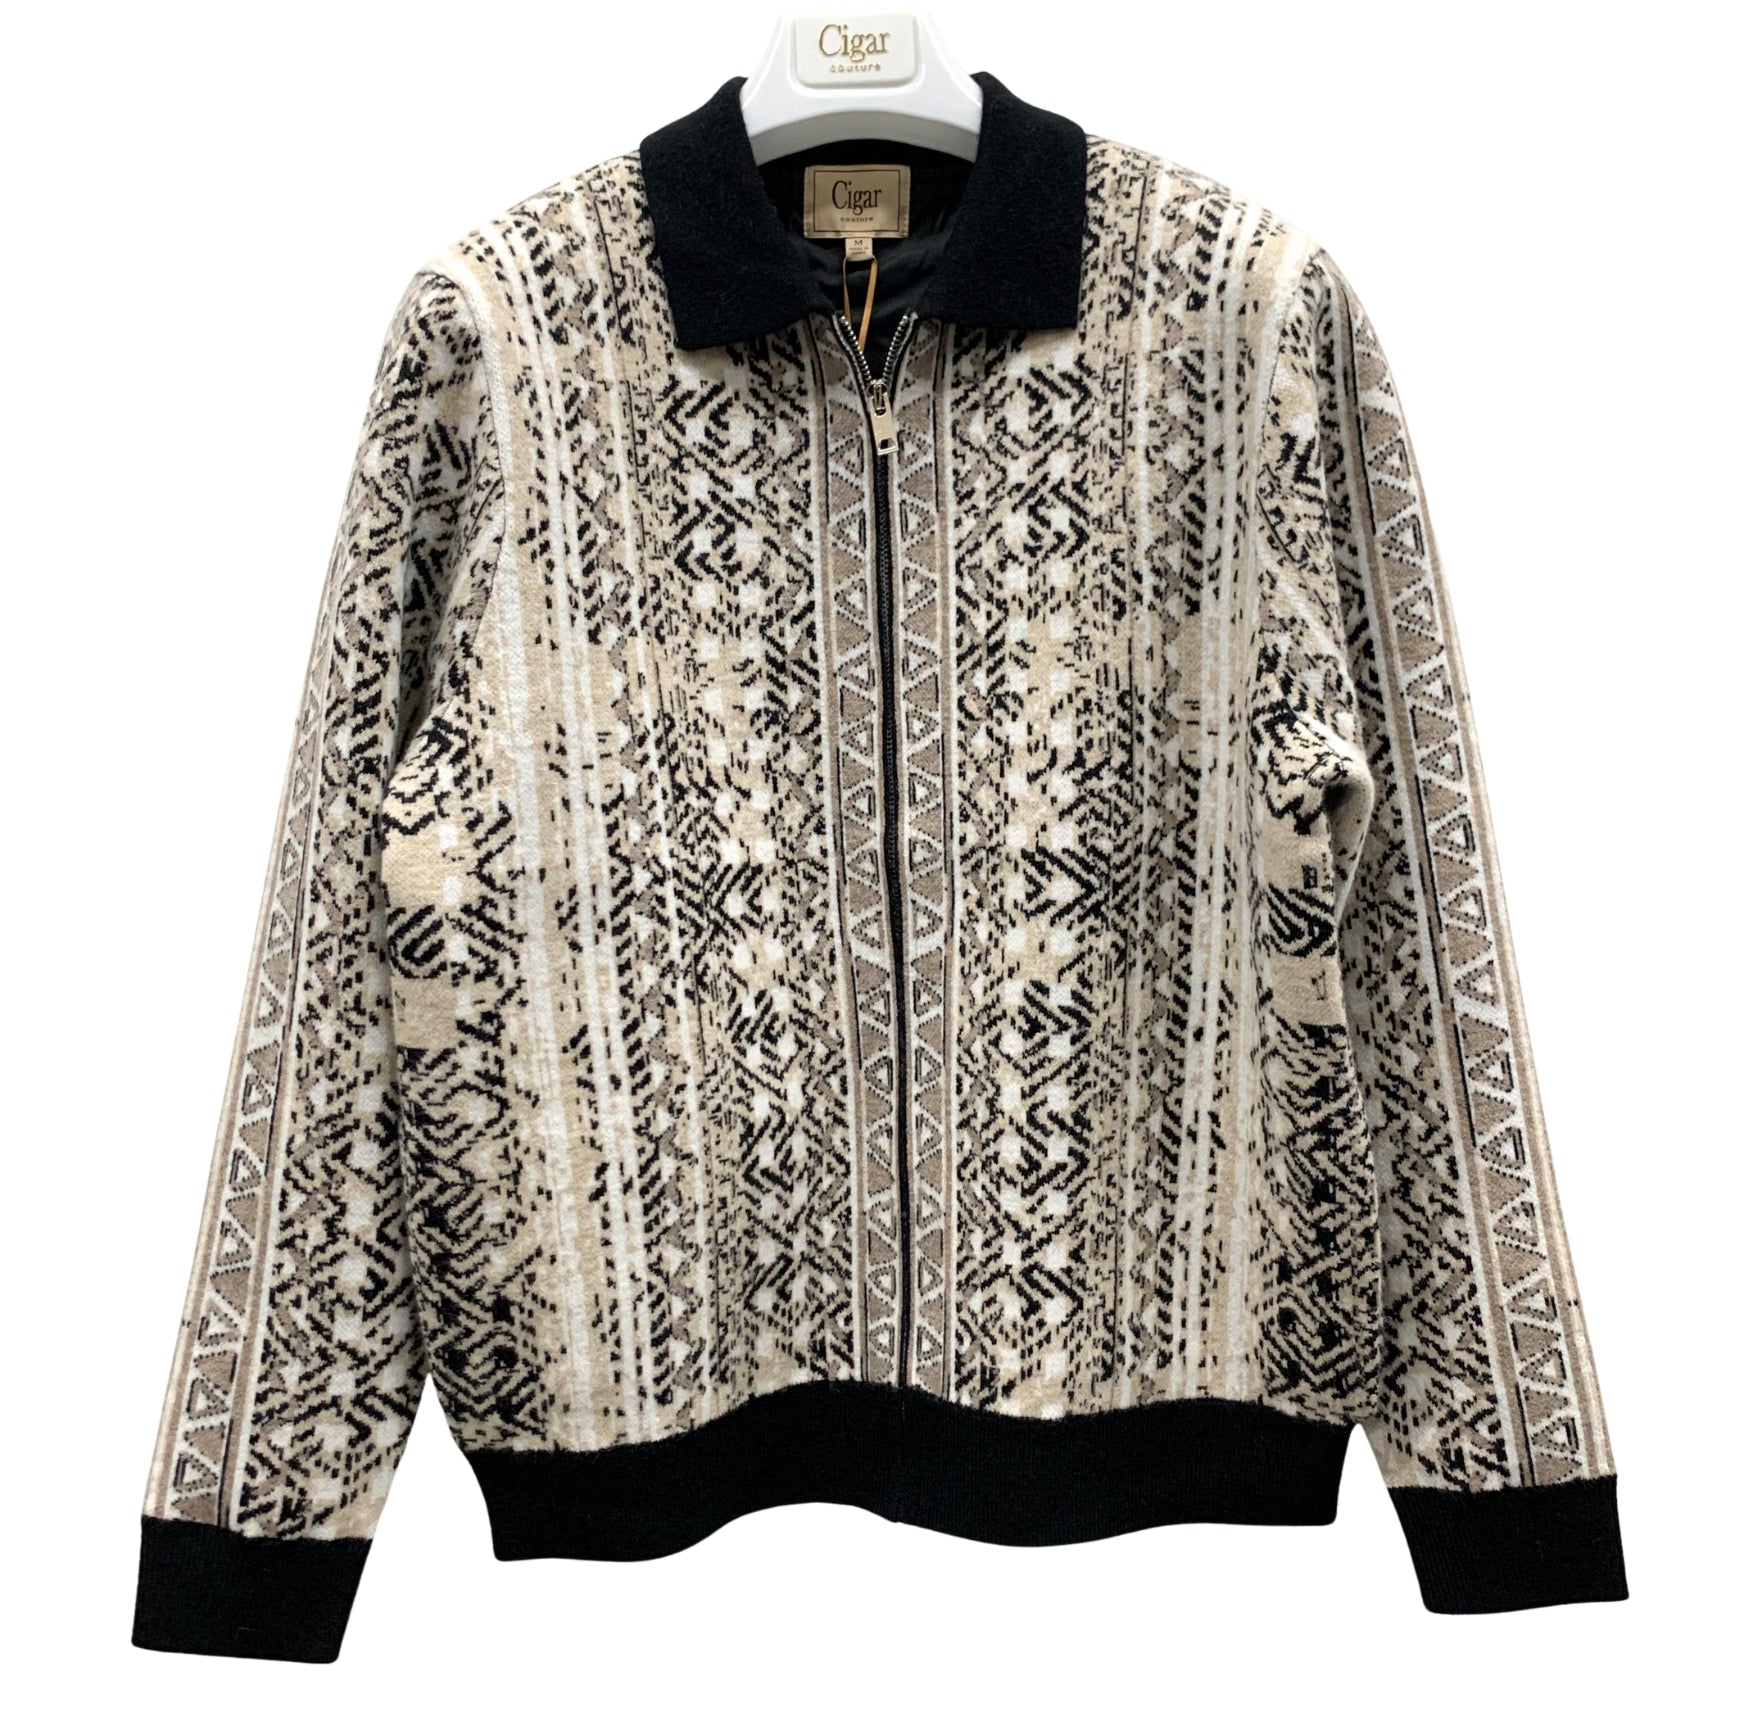 Berragamo SWJ-1476 Sweater Jacket - Black